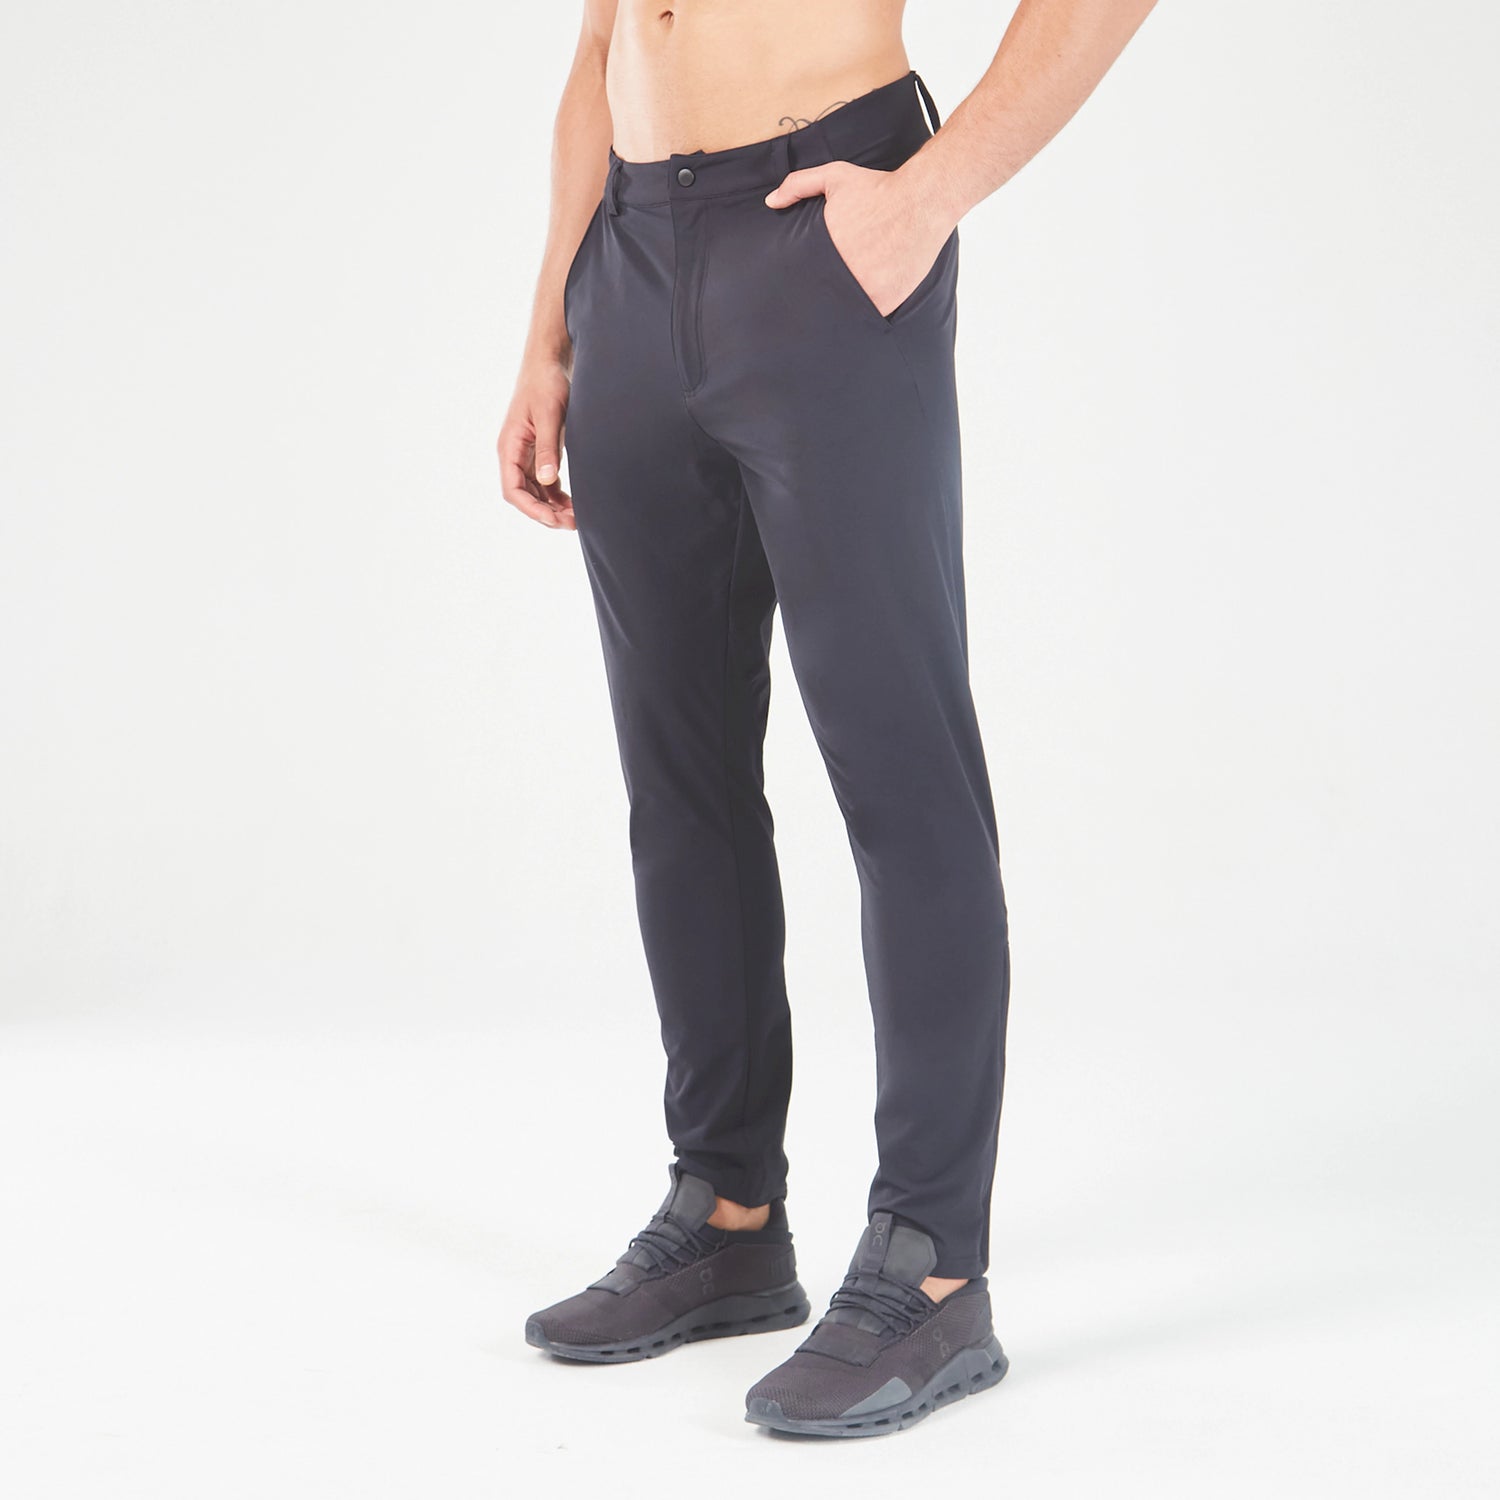 CA, Statement Ribbed Smart Pants - Black, Gym Pants